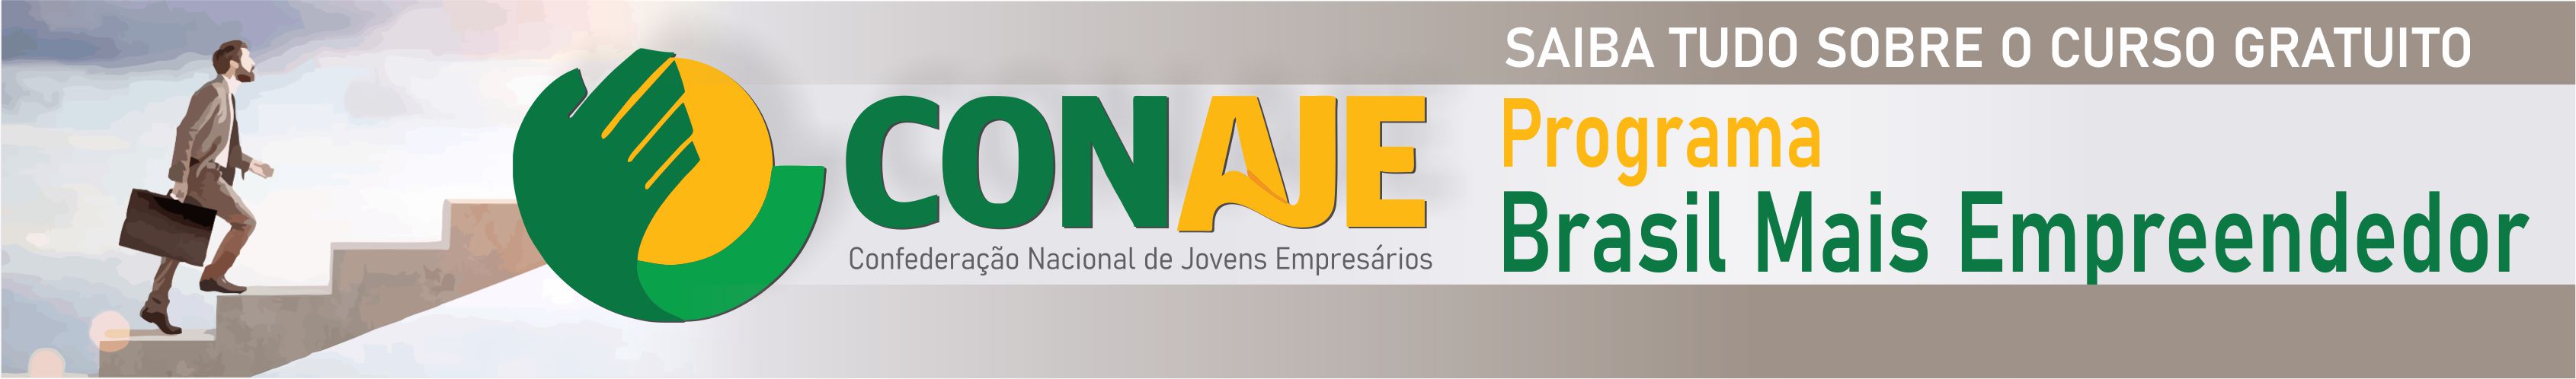 Programa Brasil Mais Empreendedor- CONAJE (2)